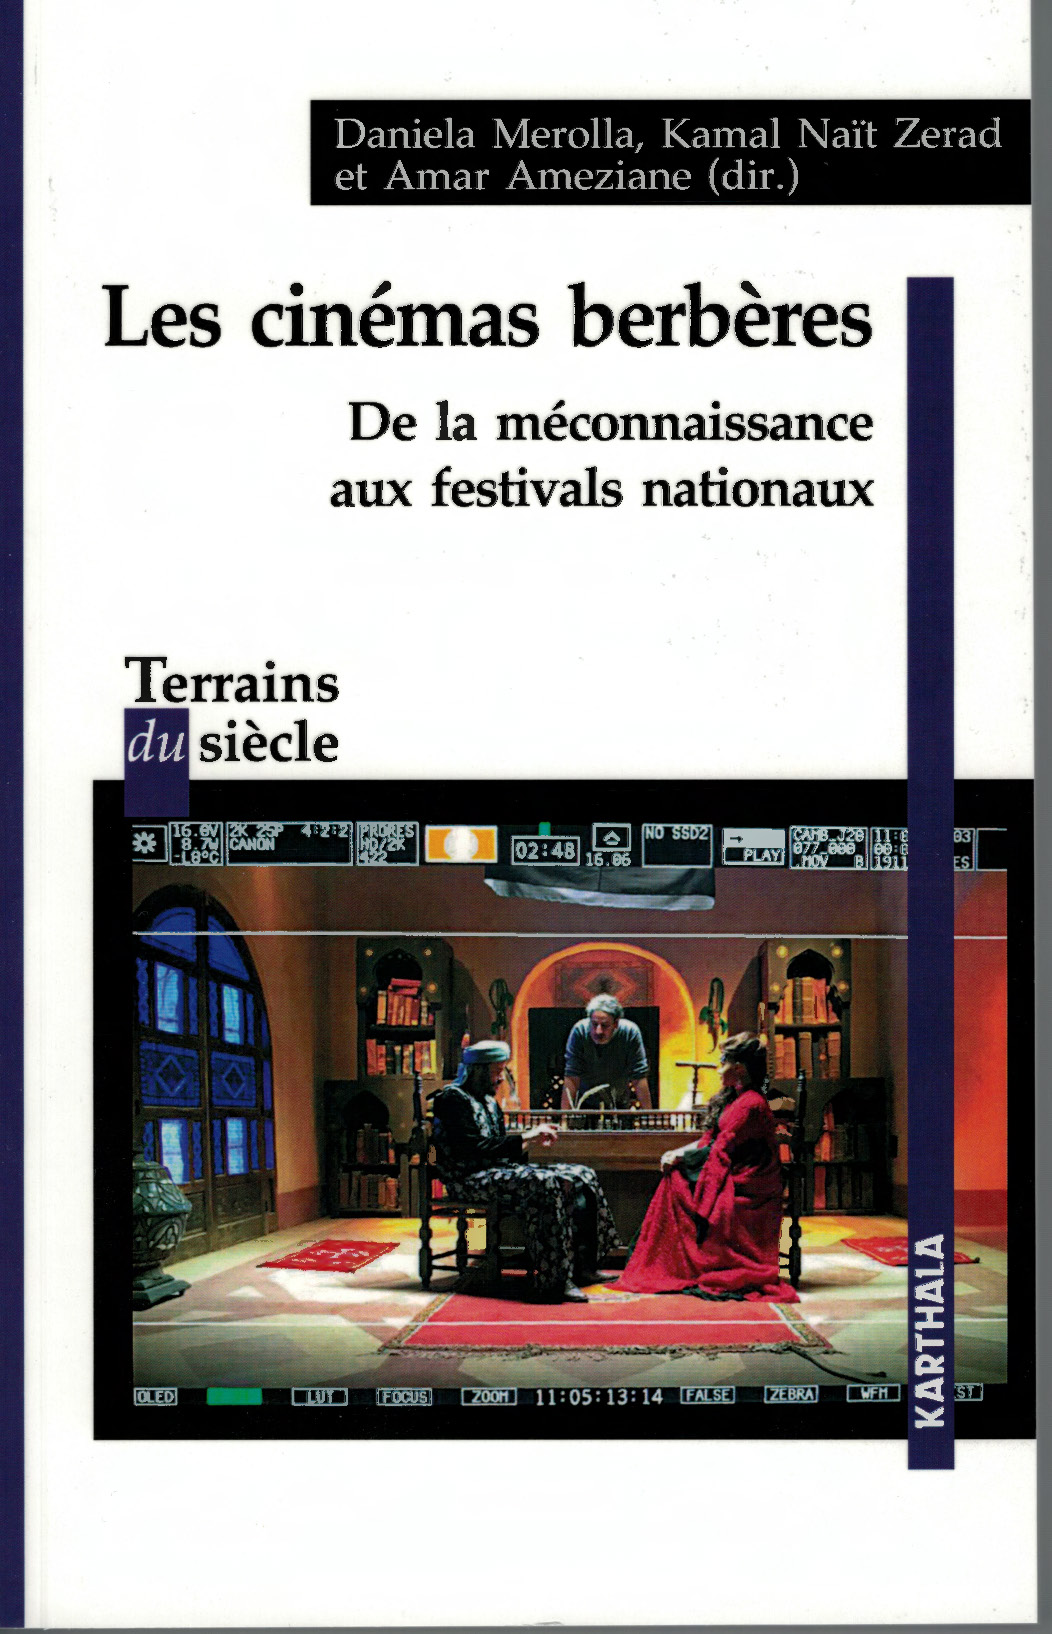 Les cinémas berbères